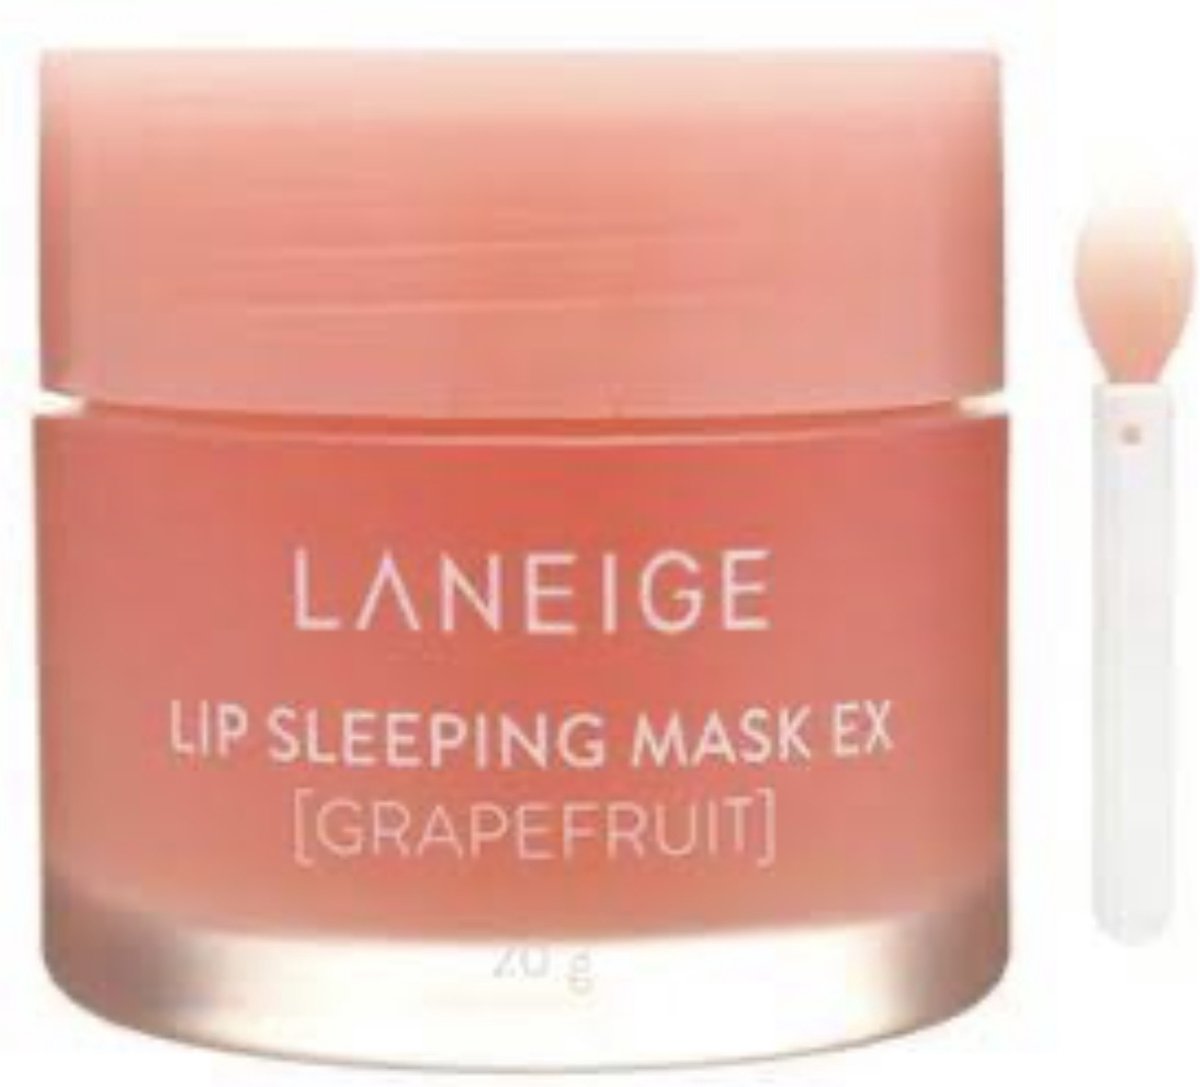 Laneige Lip Sleeping Mask - EX Grapefruit - Laneige